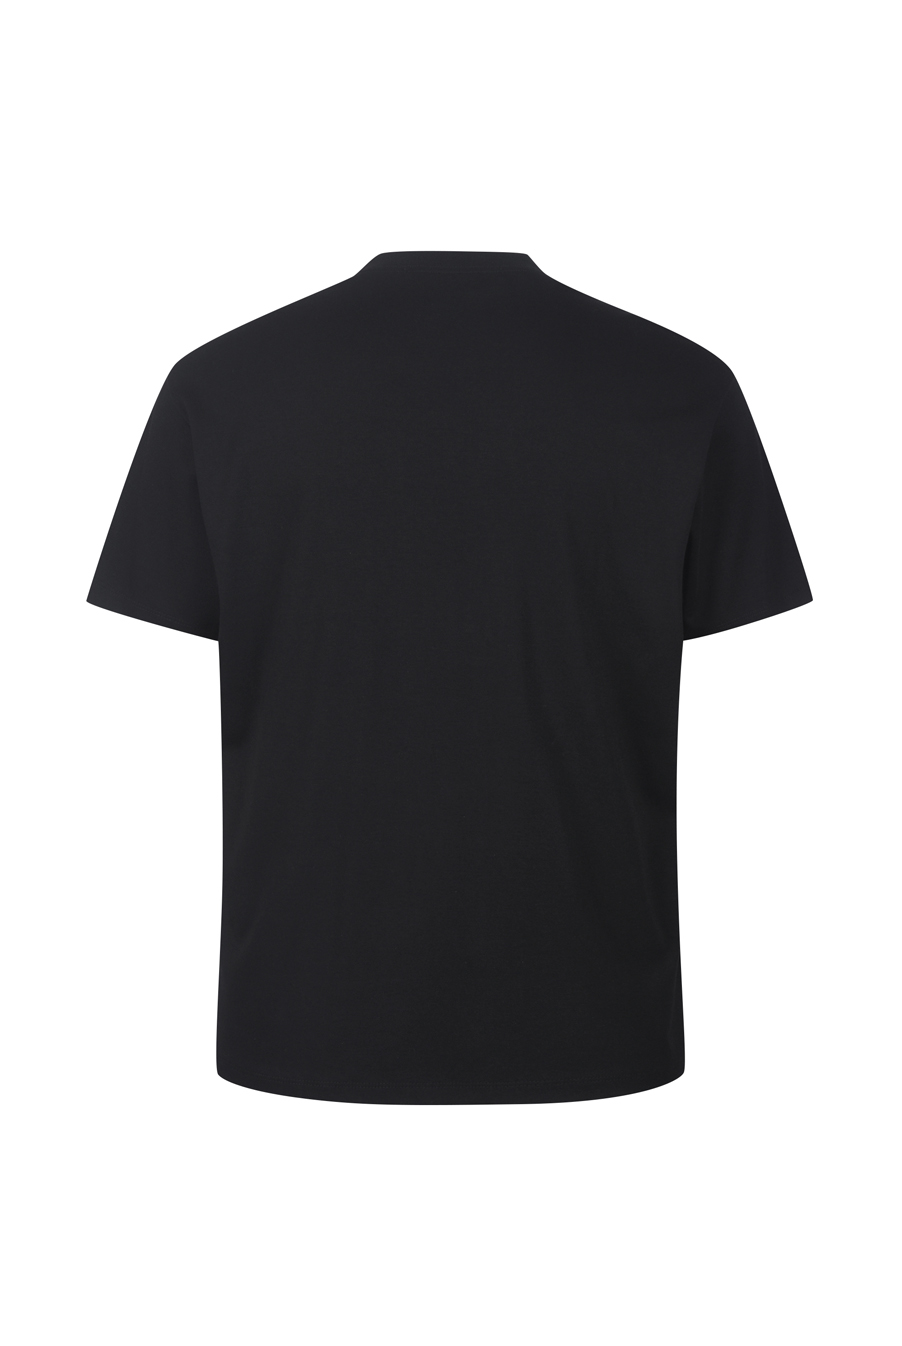 Triangle Pocket T-shirt - black